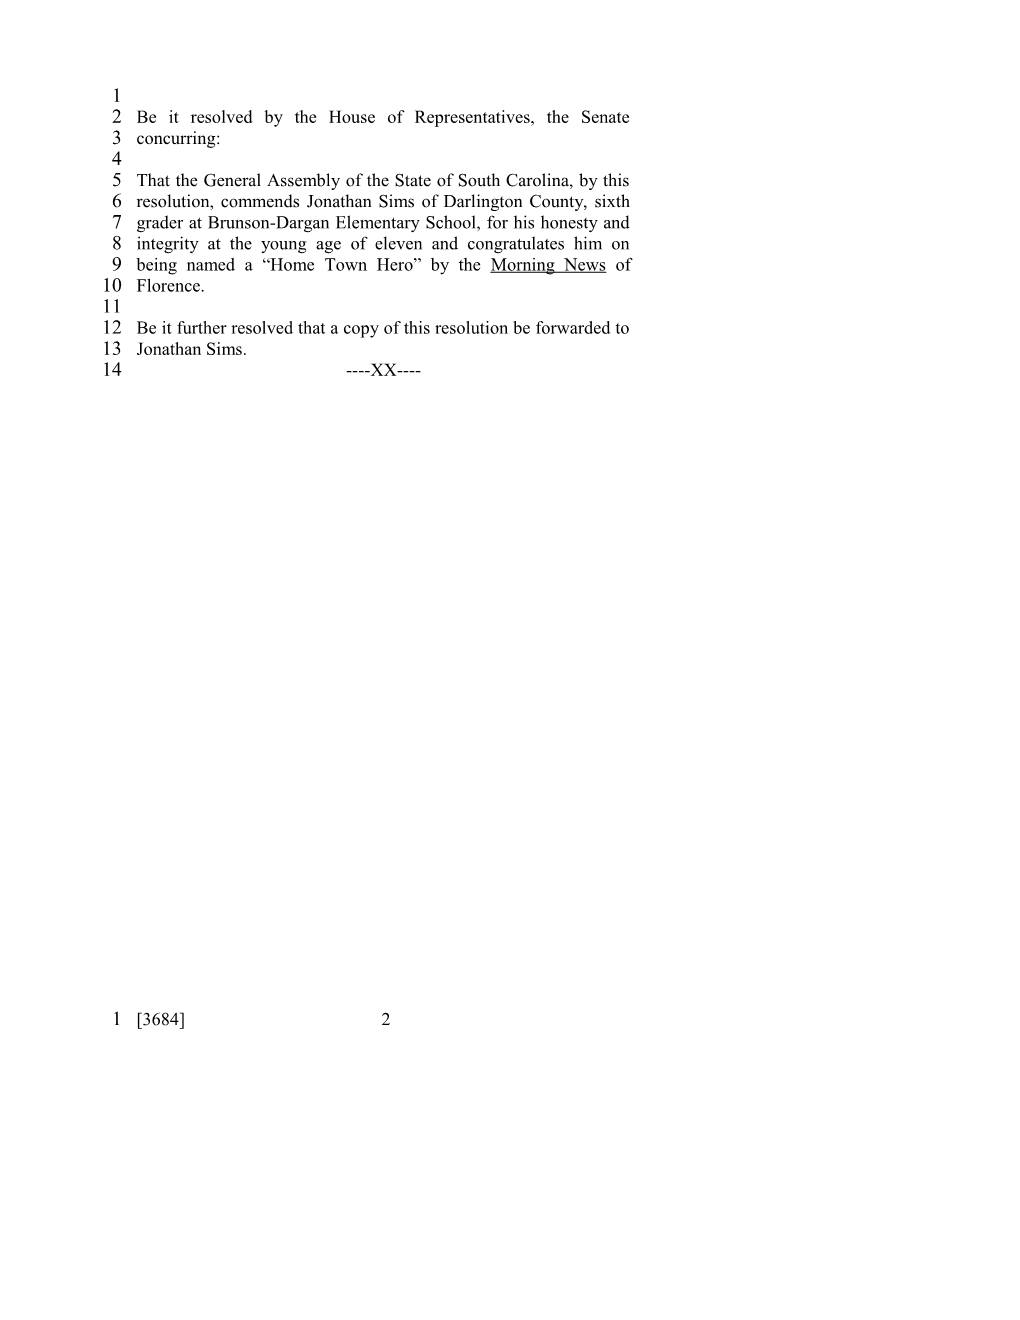 1999-2000 Bill 3684: Jonathan Sims, Resolutions - South Carolina Legislature Online